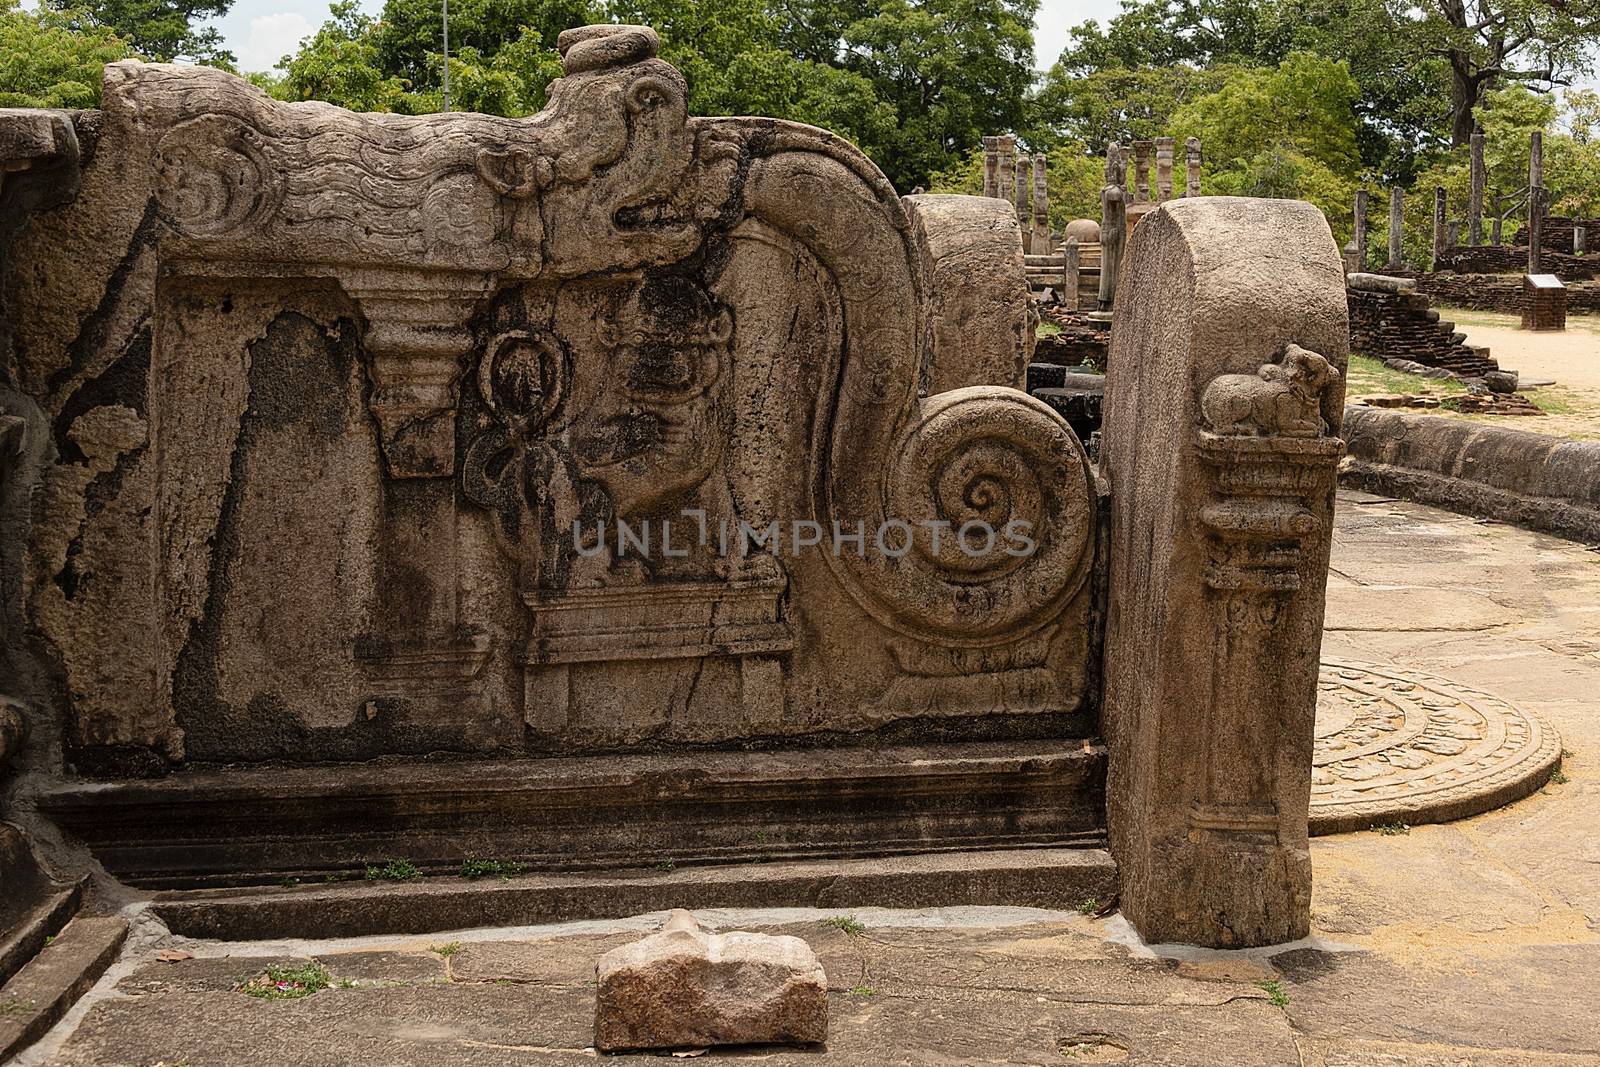 Polonnaruwa, Sri lanka, Sept 2015: Carvings of gods flank the staircases inthe ruins at Polonuwara